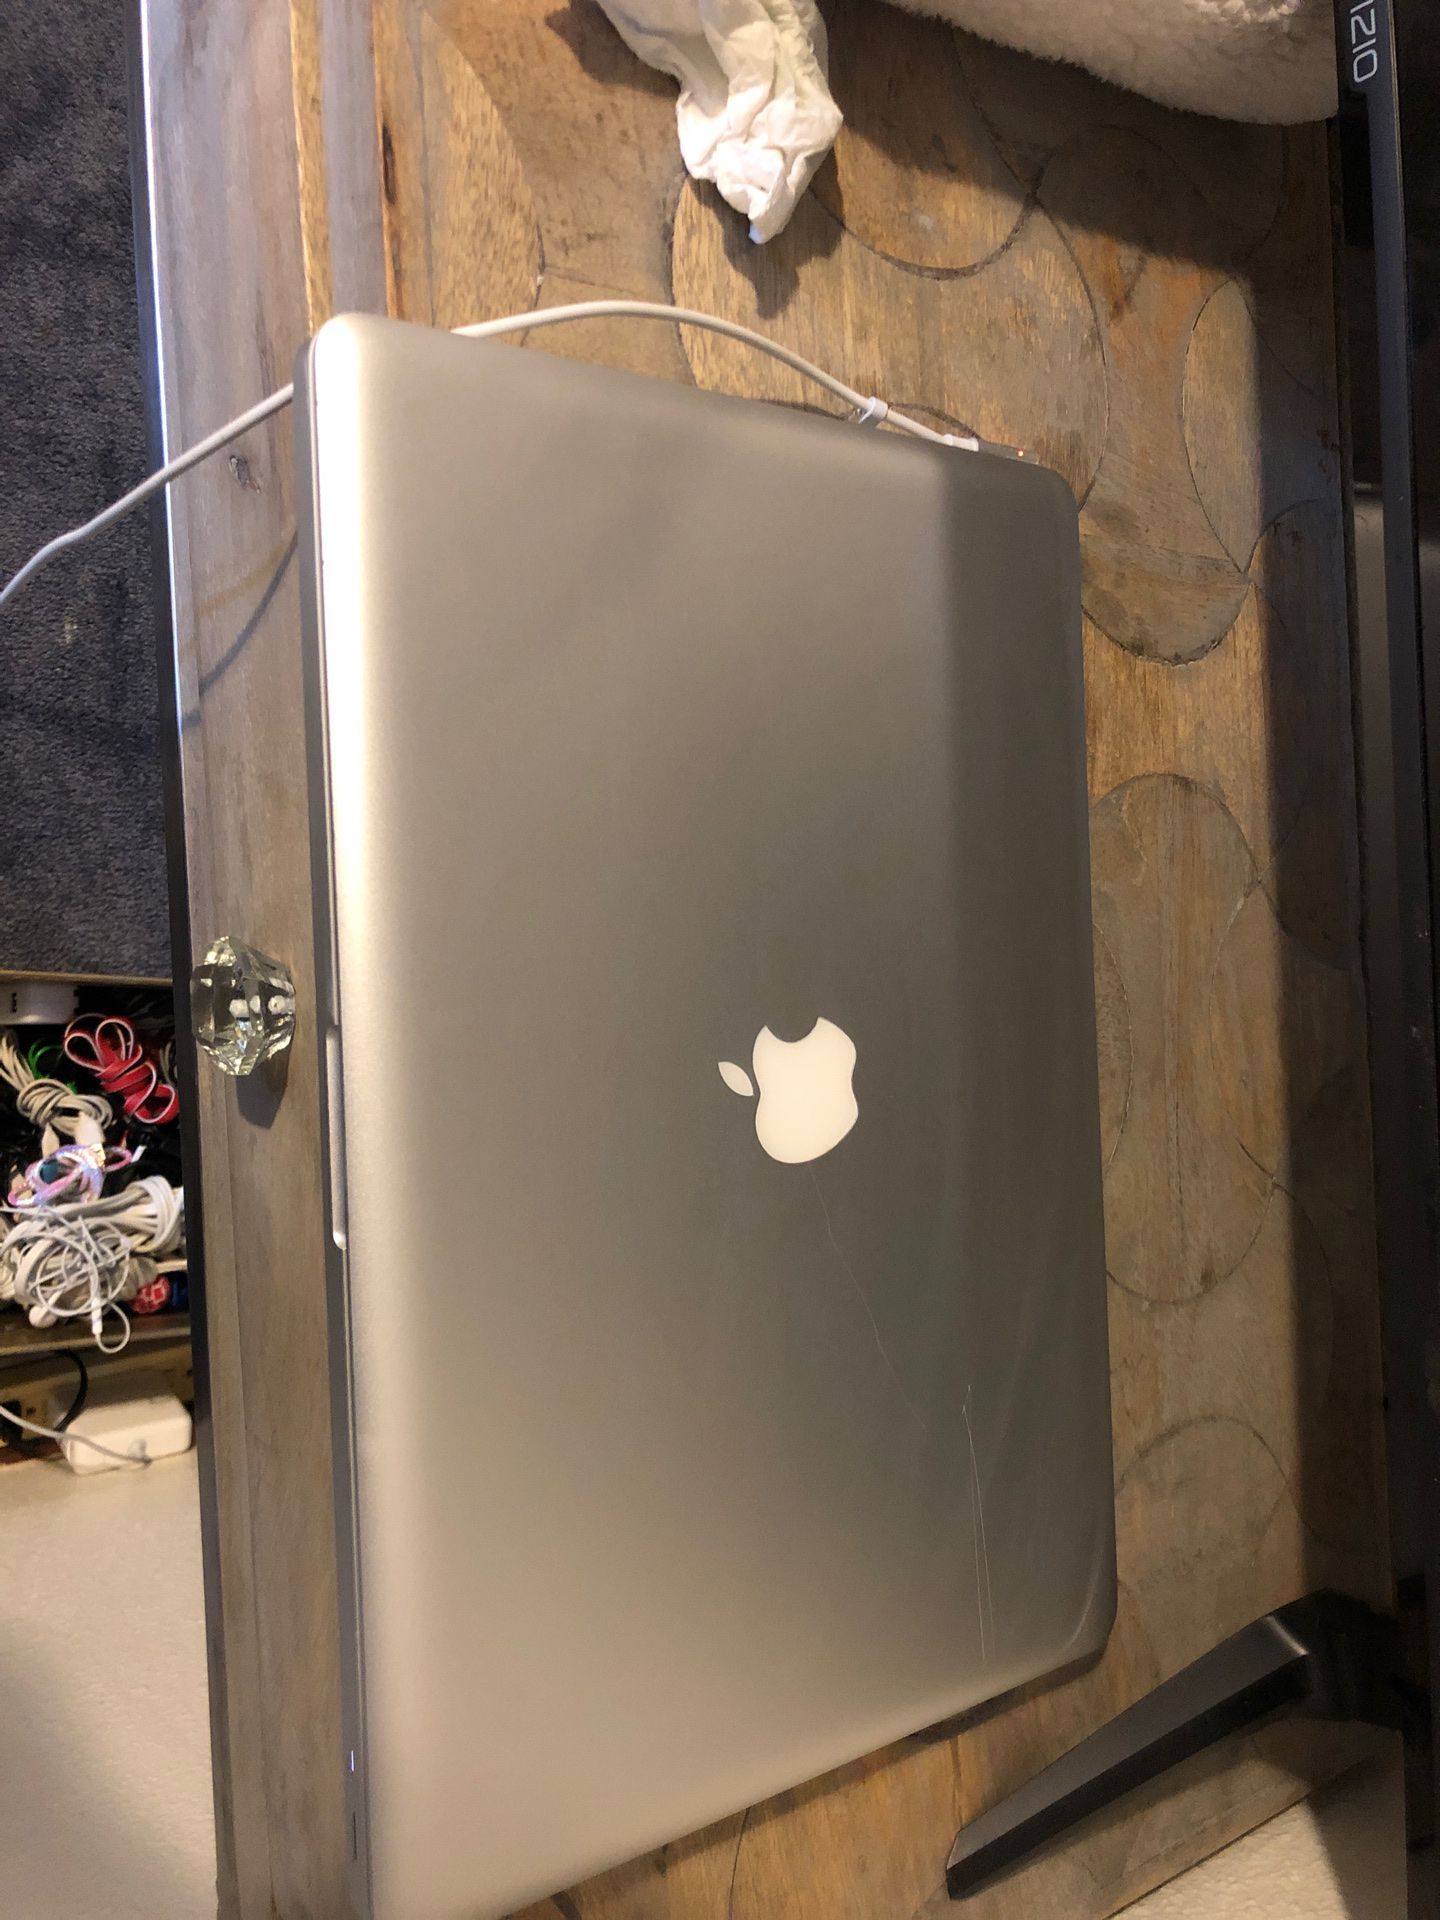 MacBook Pro (15 inch,Mid 2012) 380 OBO